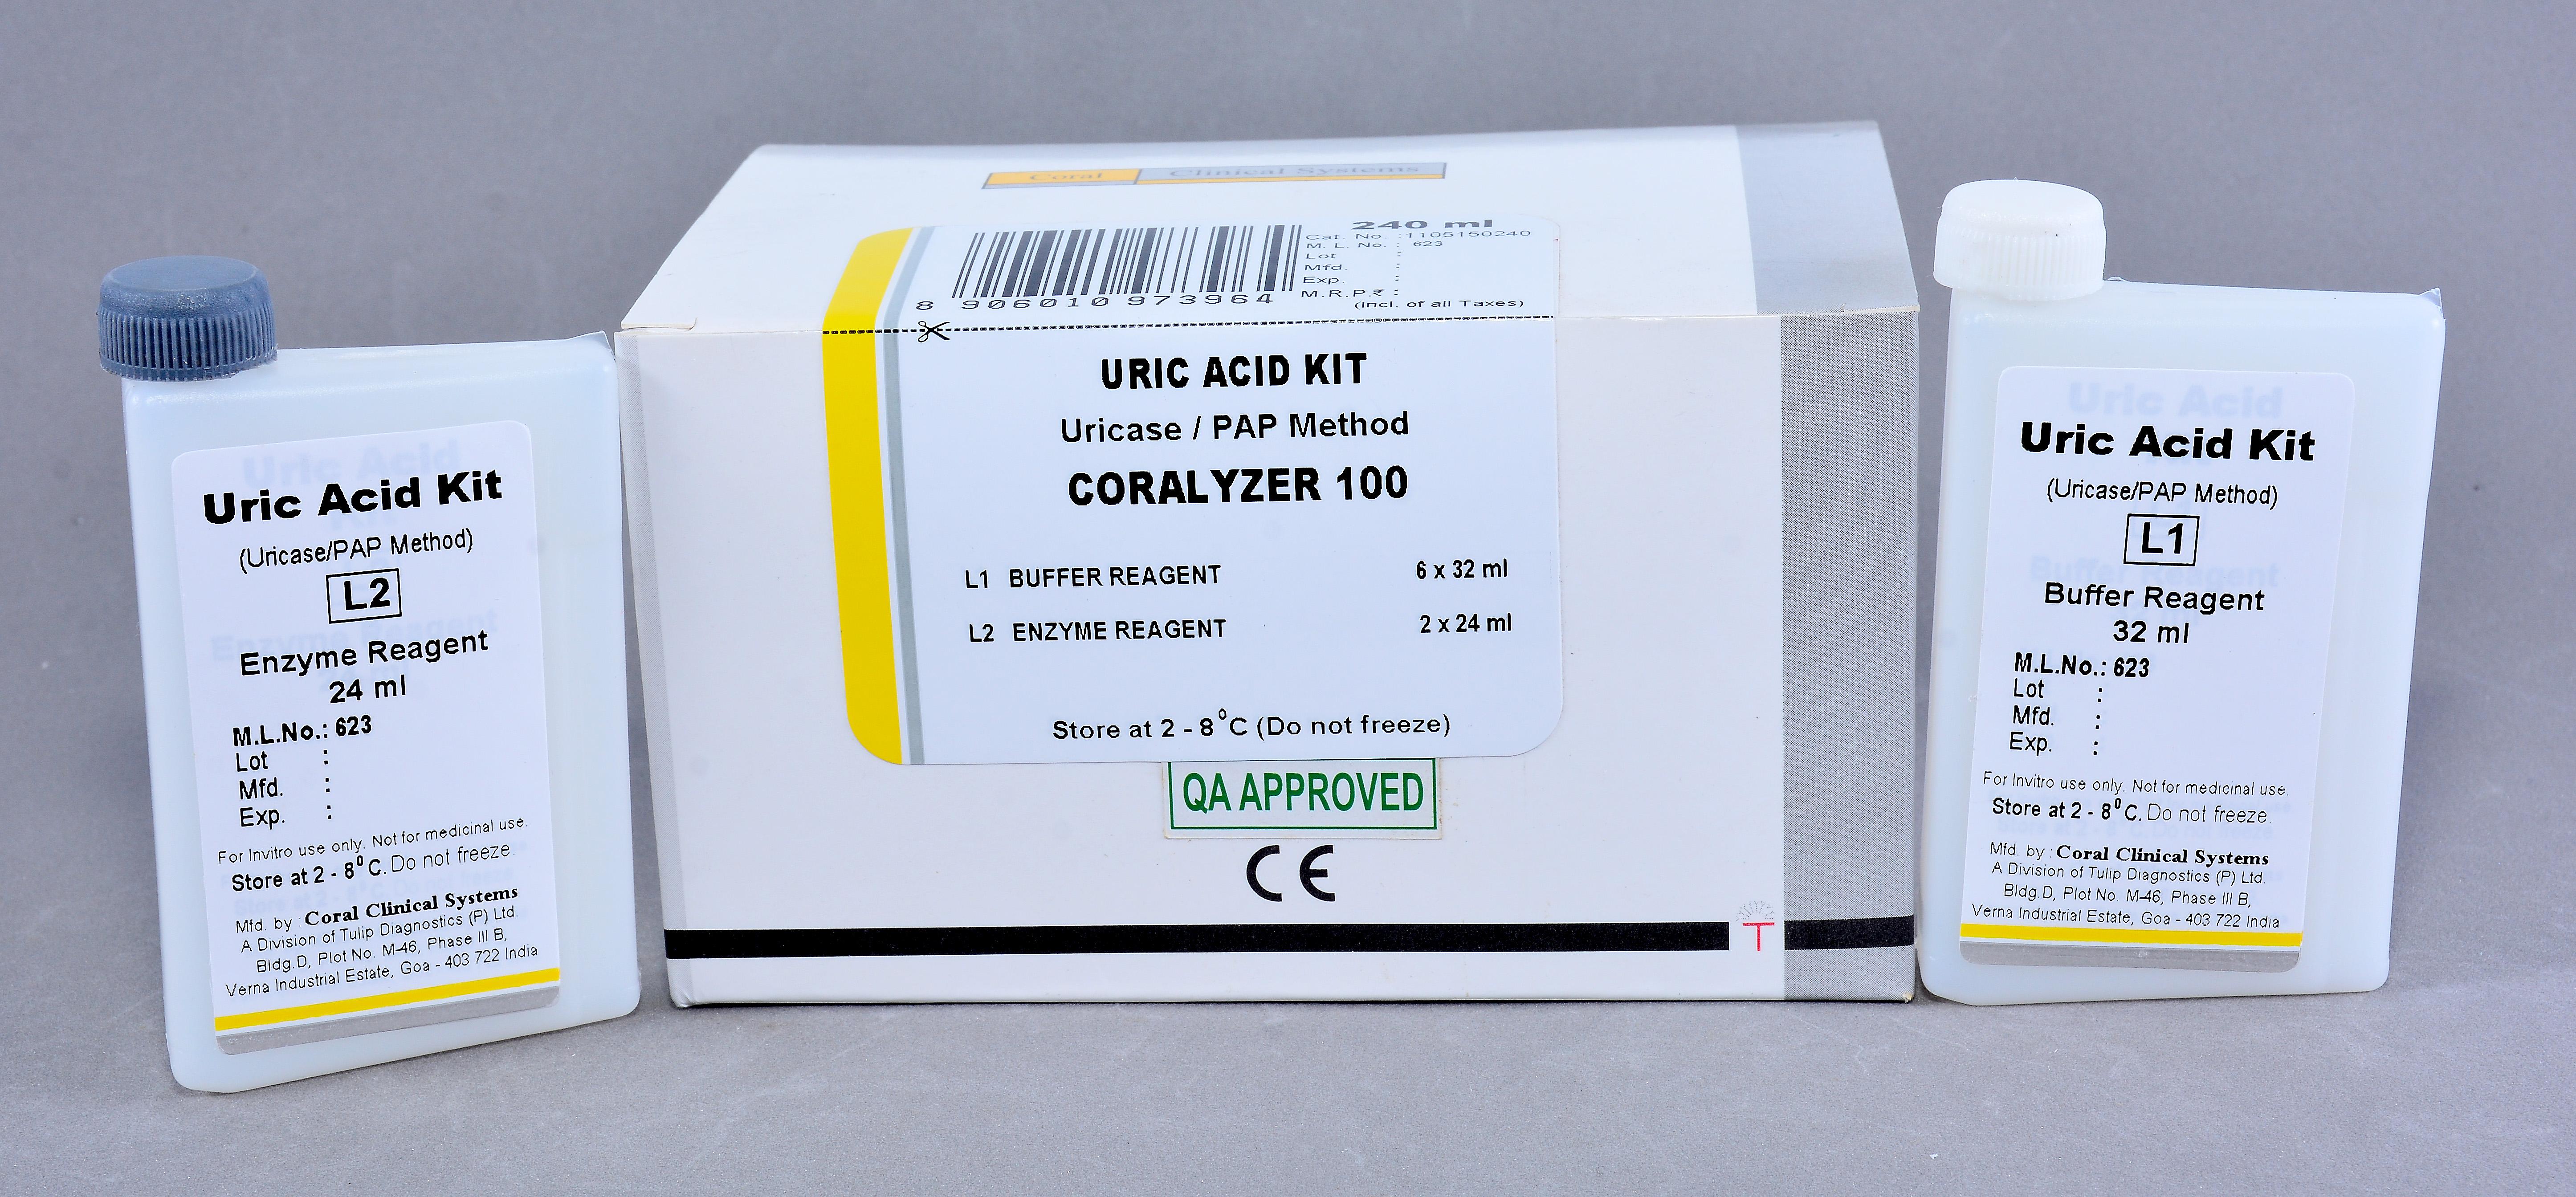 Coralyzer 100 System Pack Uric Acid